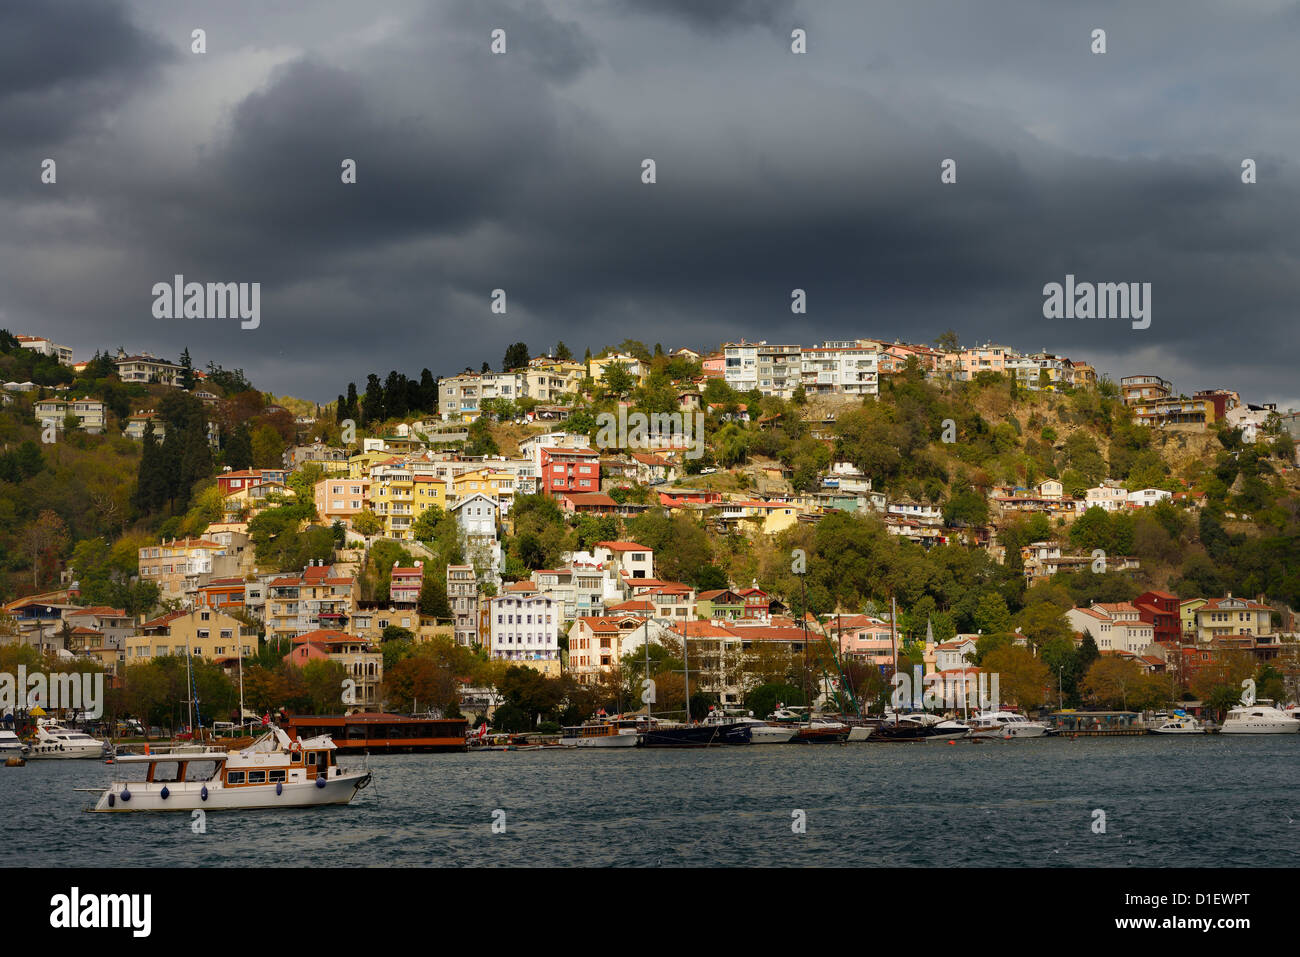 Sun on homes on a hillside of Arnavutkoy Besiktas Istanbul Turkey with storm clouds on the Bosphorus Strait Stock Photo